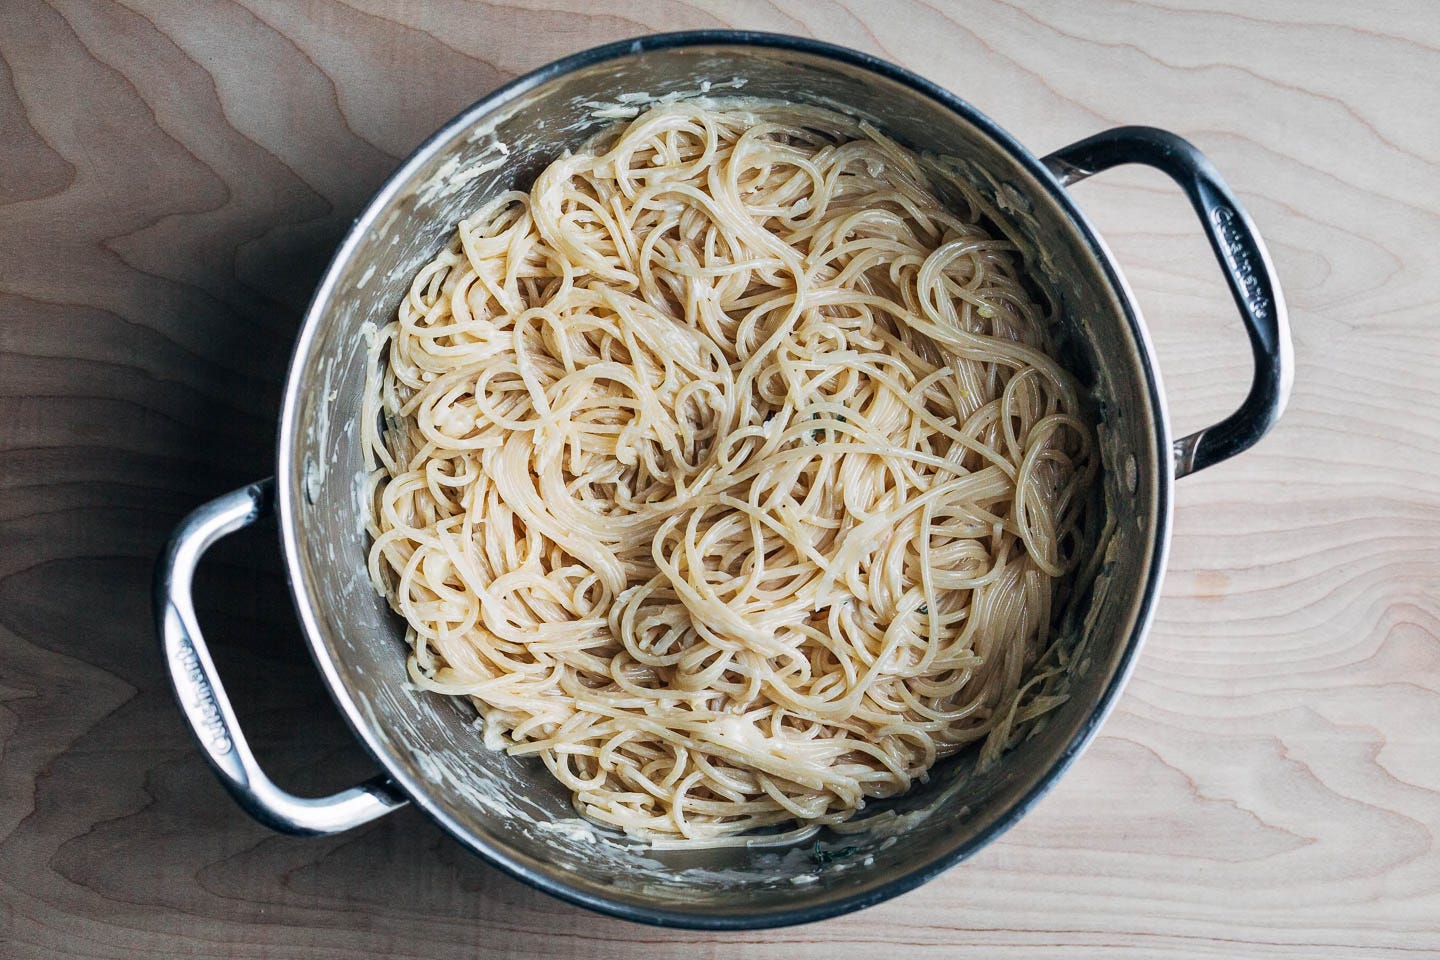 A pot with creamy pasta